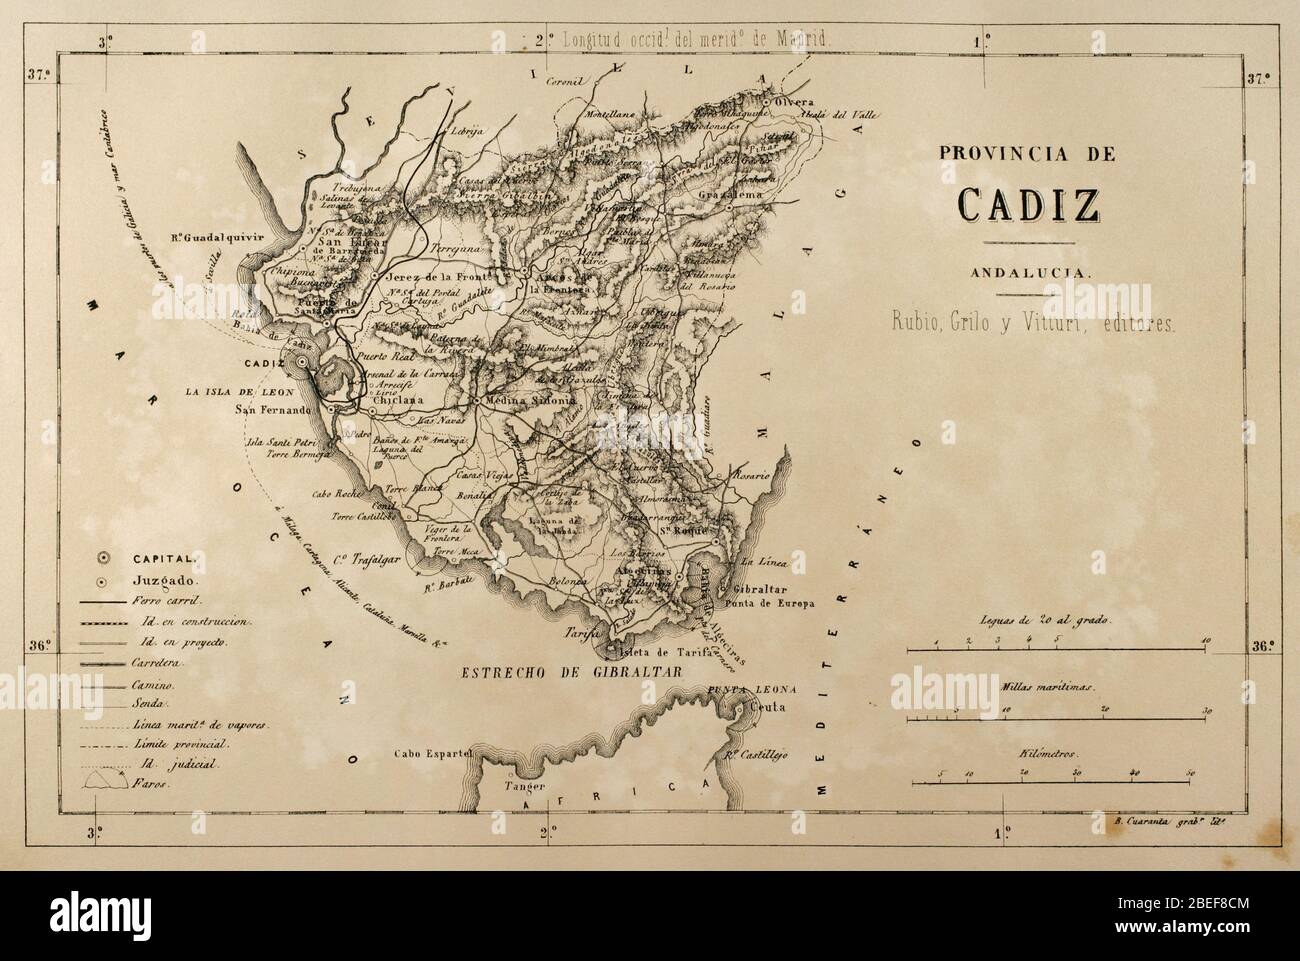 Map of the Cadiz province. Stock Photo